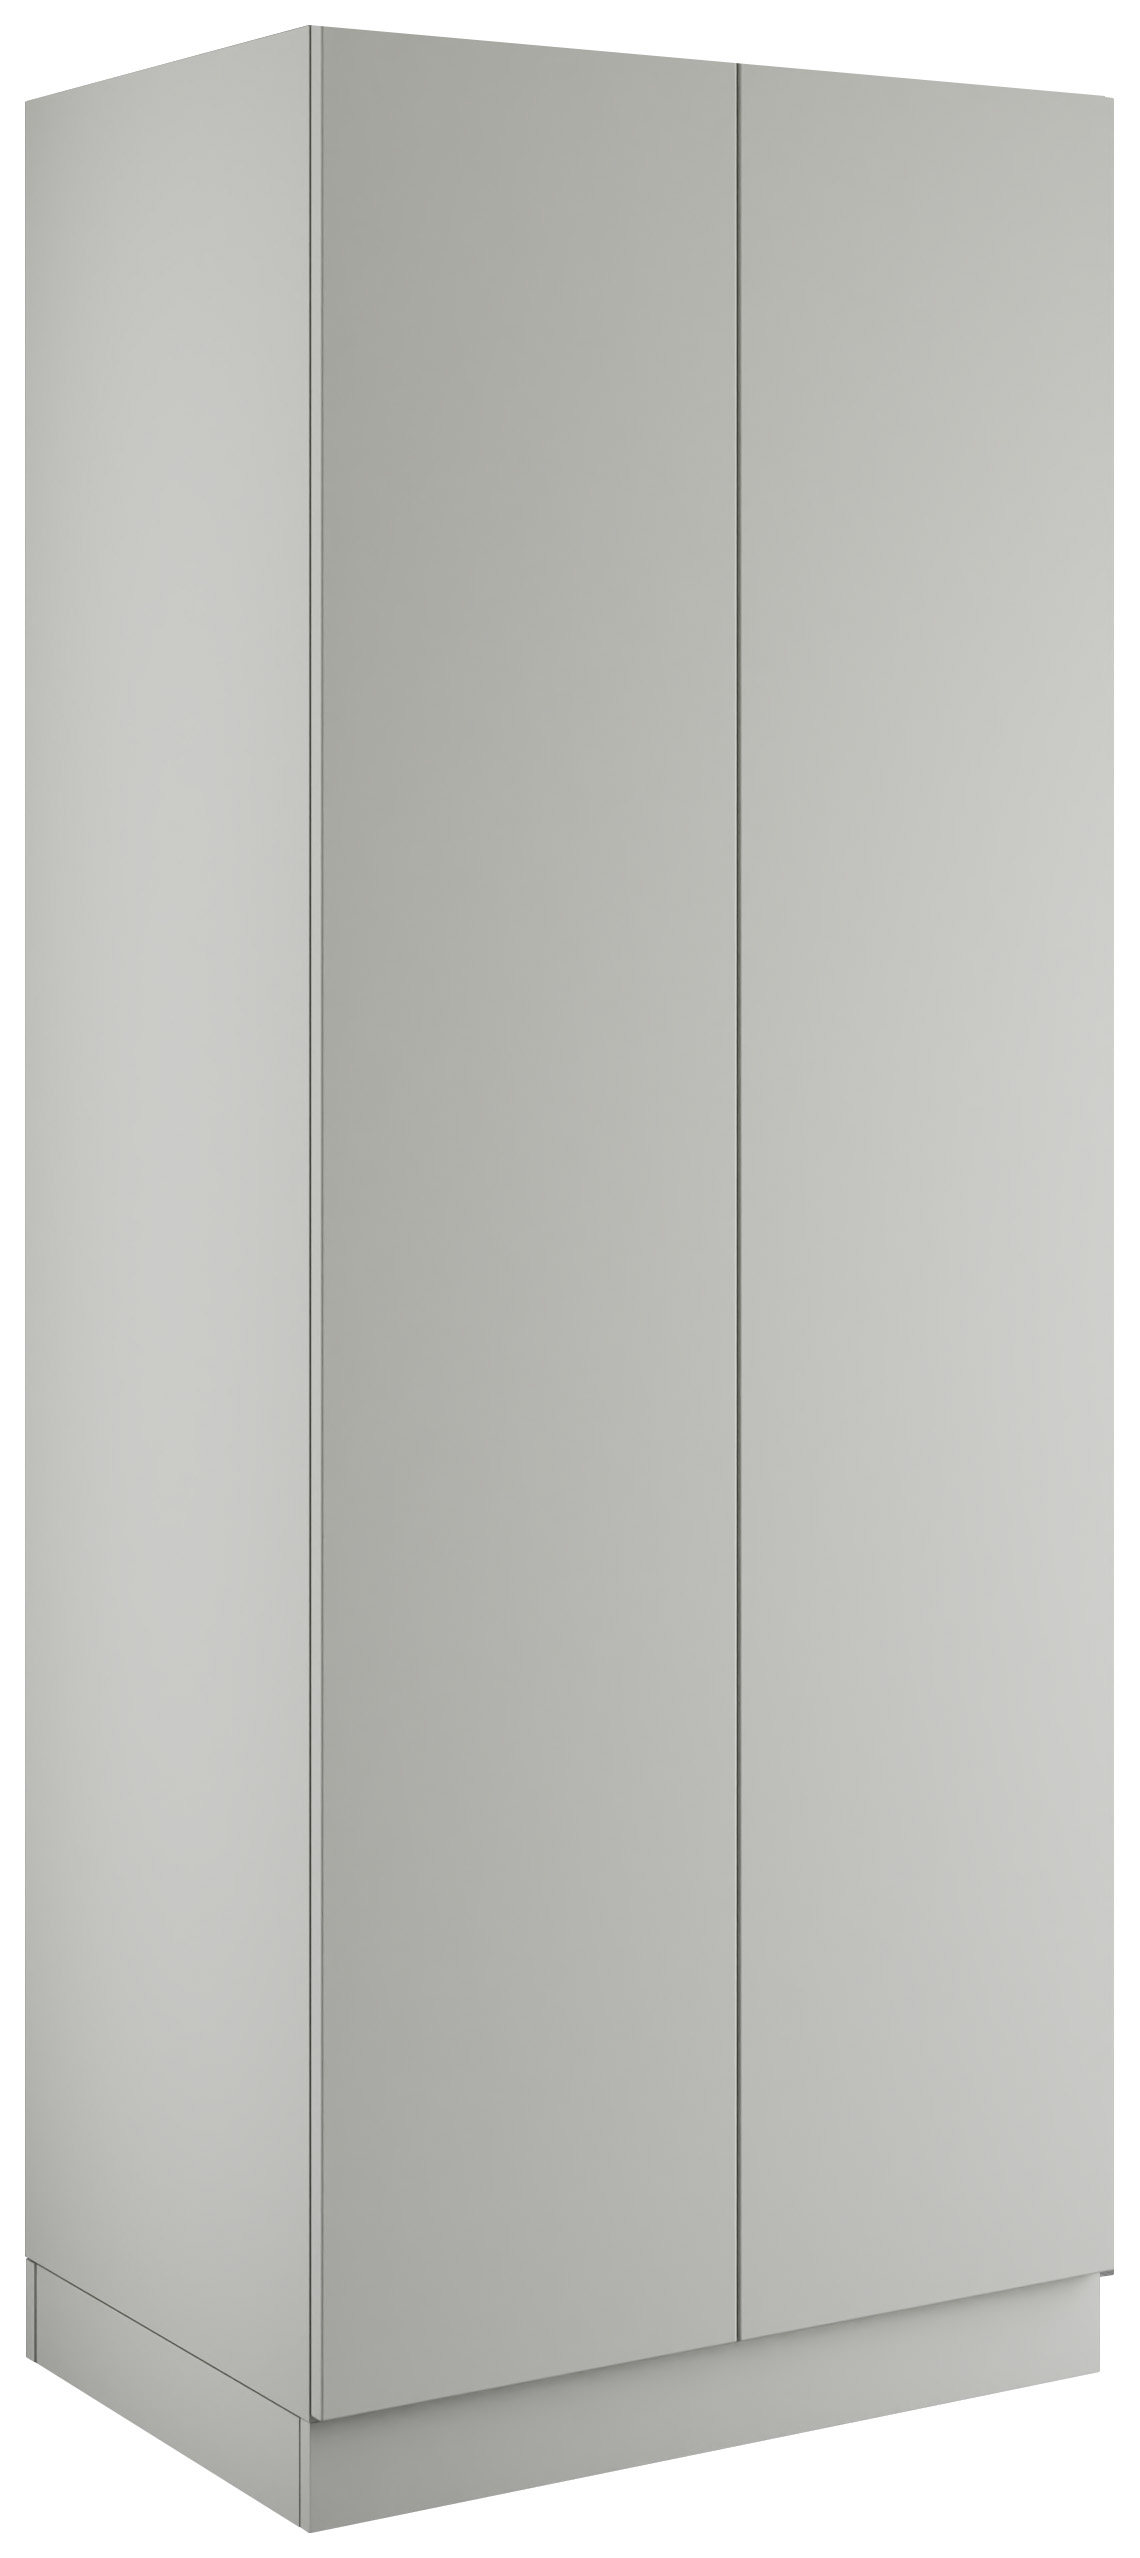 Malton Light Grey Double Wardrobe with Single Rail & Internal Drawers - 900 x 2260 x 608mm